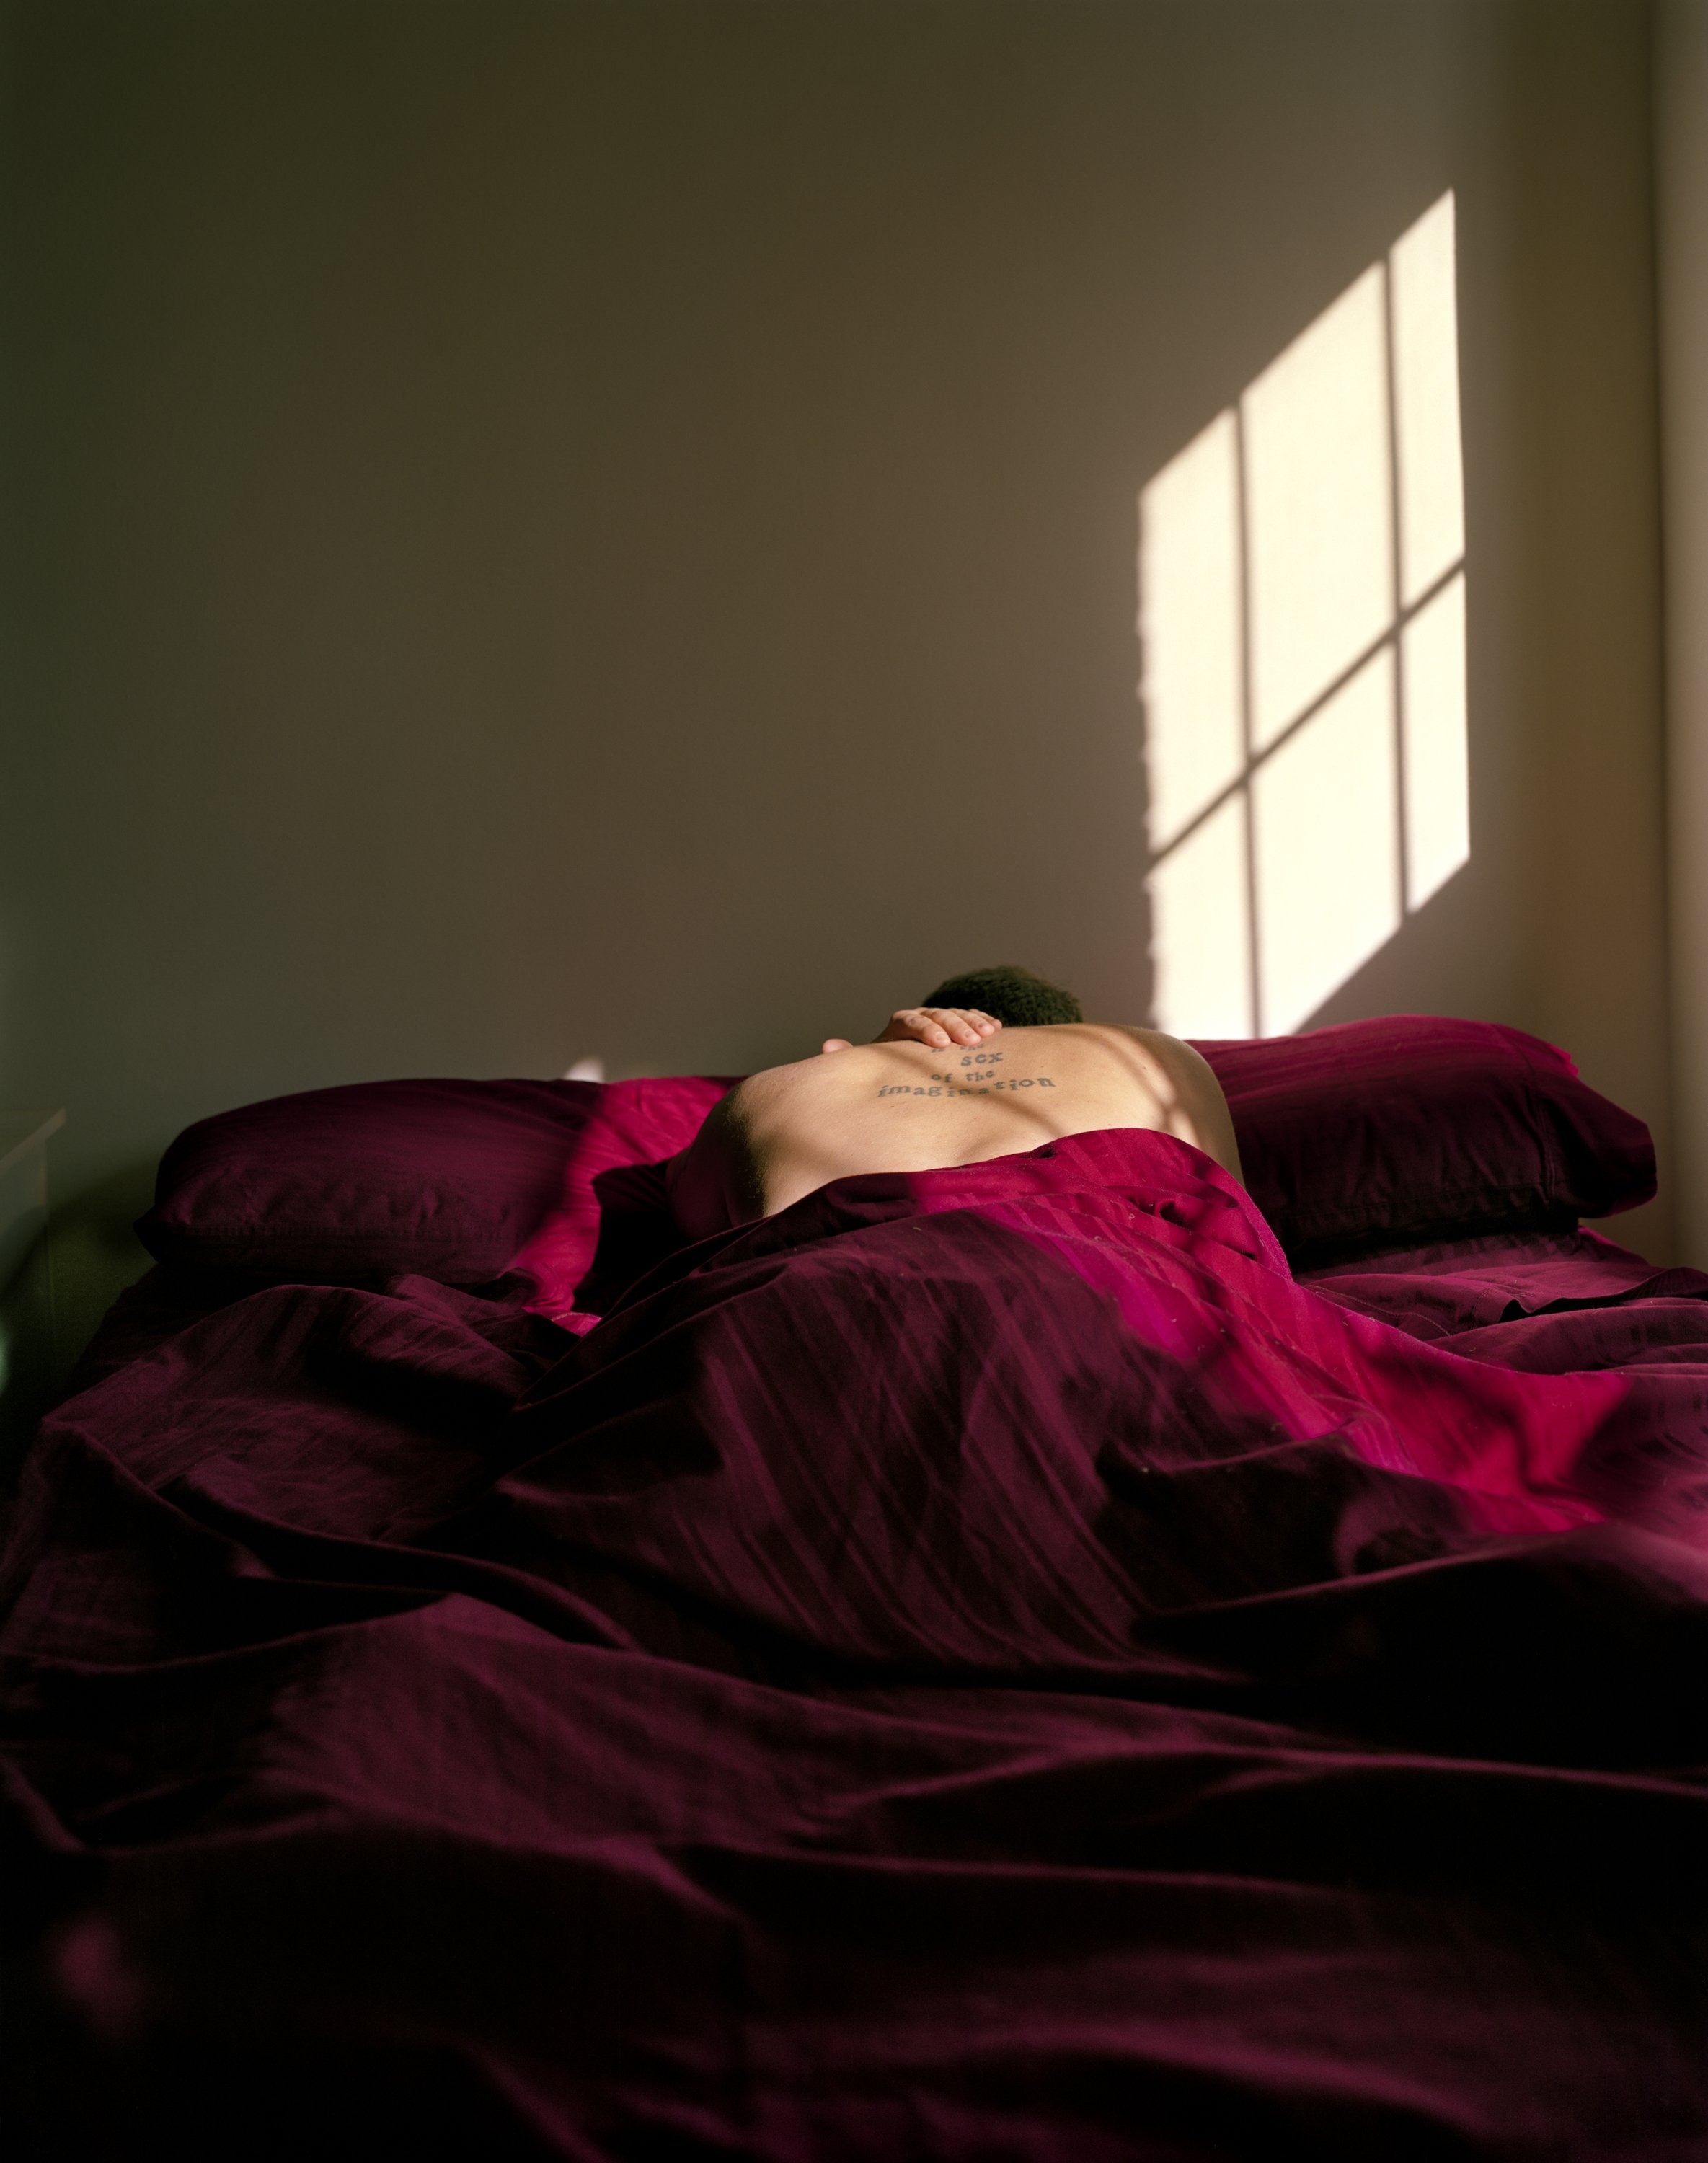  Self-portrait (bed), 2011 